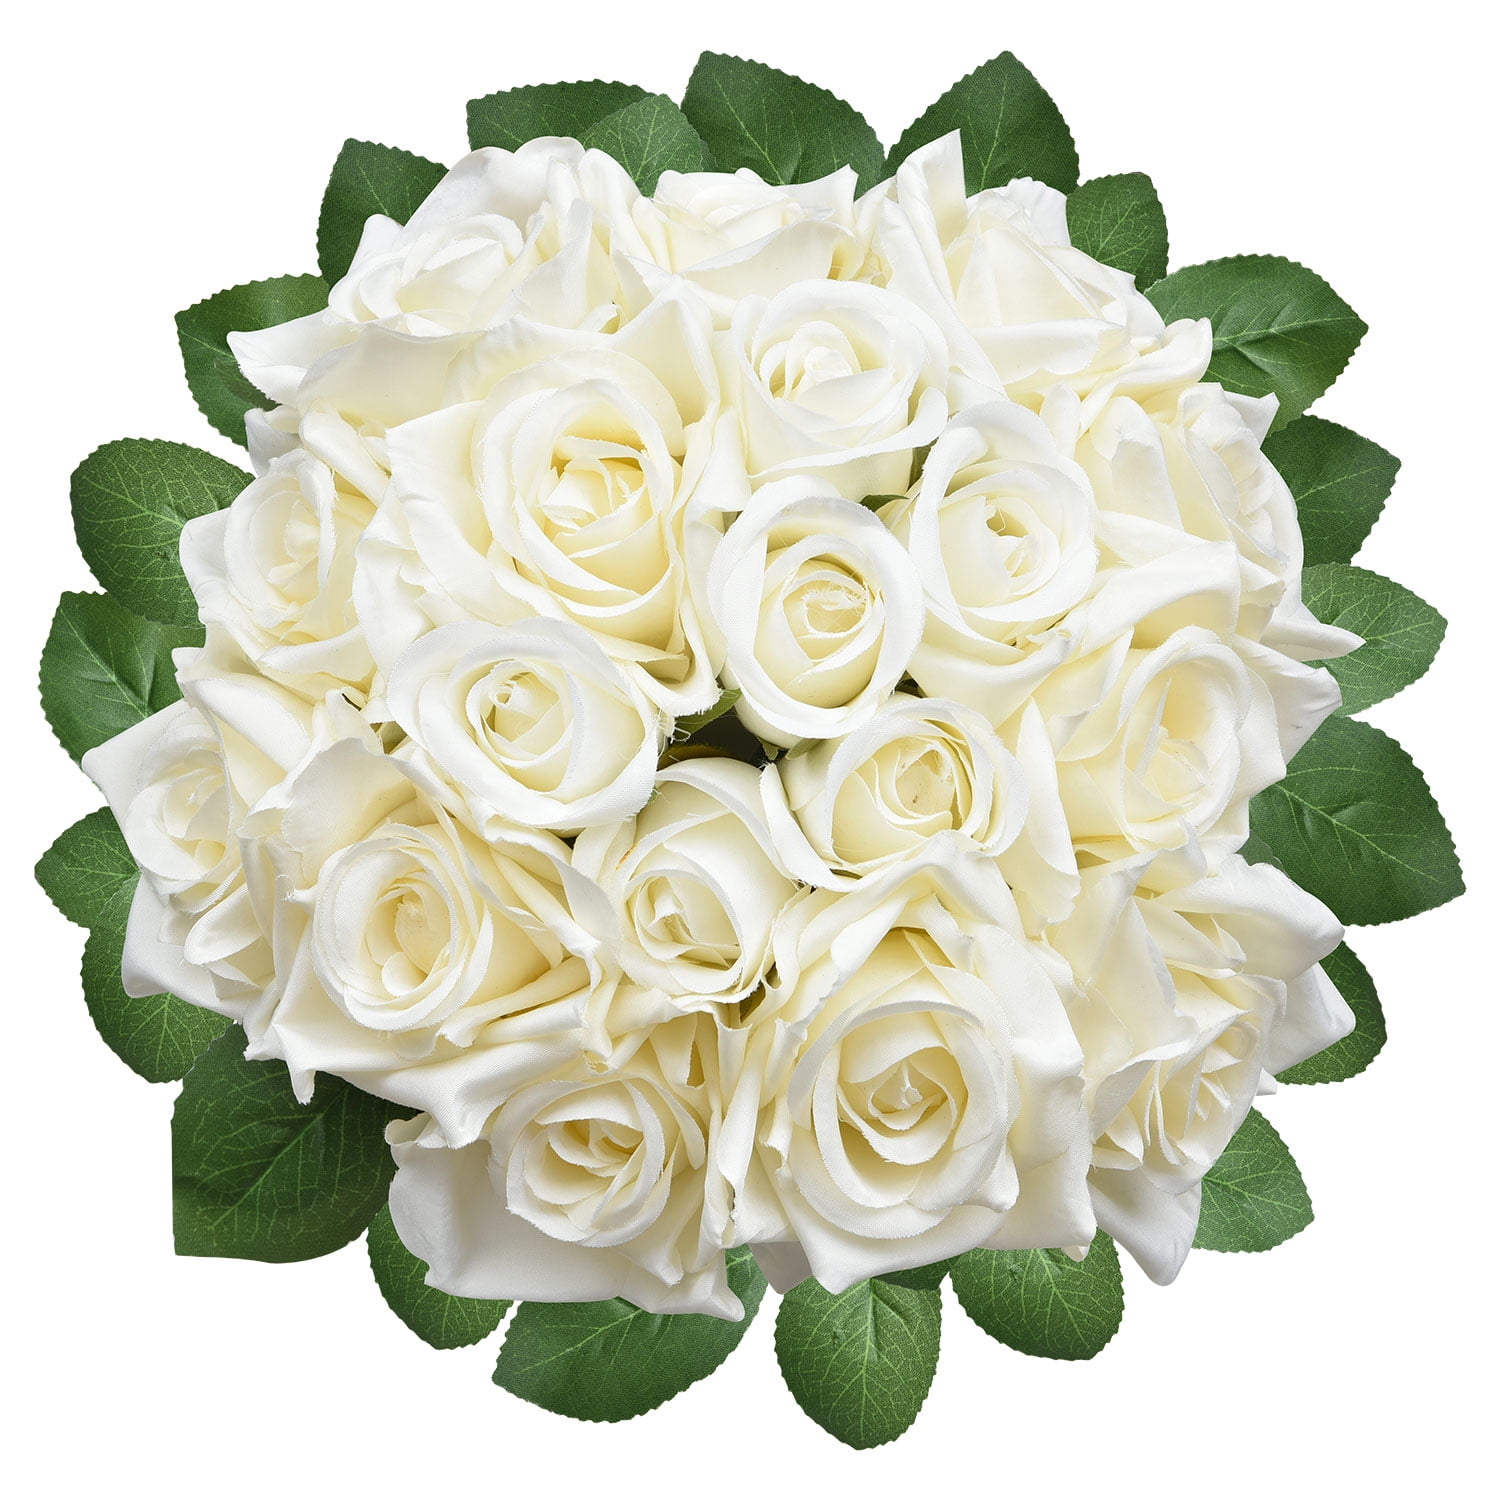 6 x White foam single rose flower Wedding Buttonholes NEW Handmade 